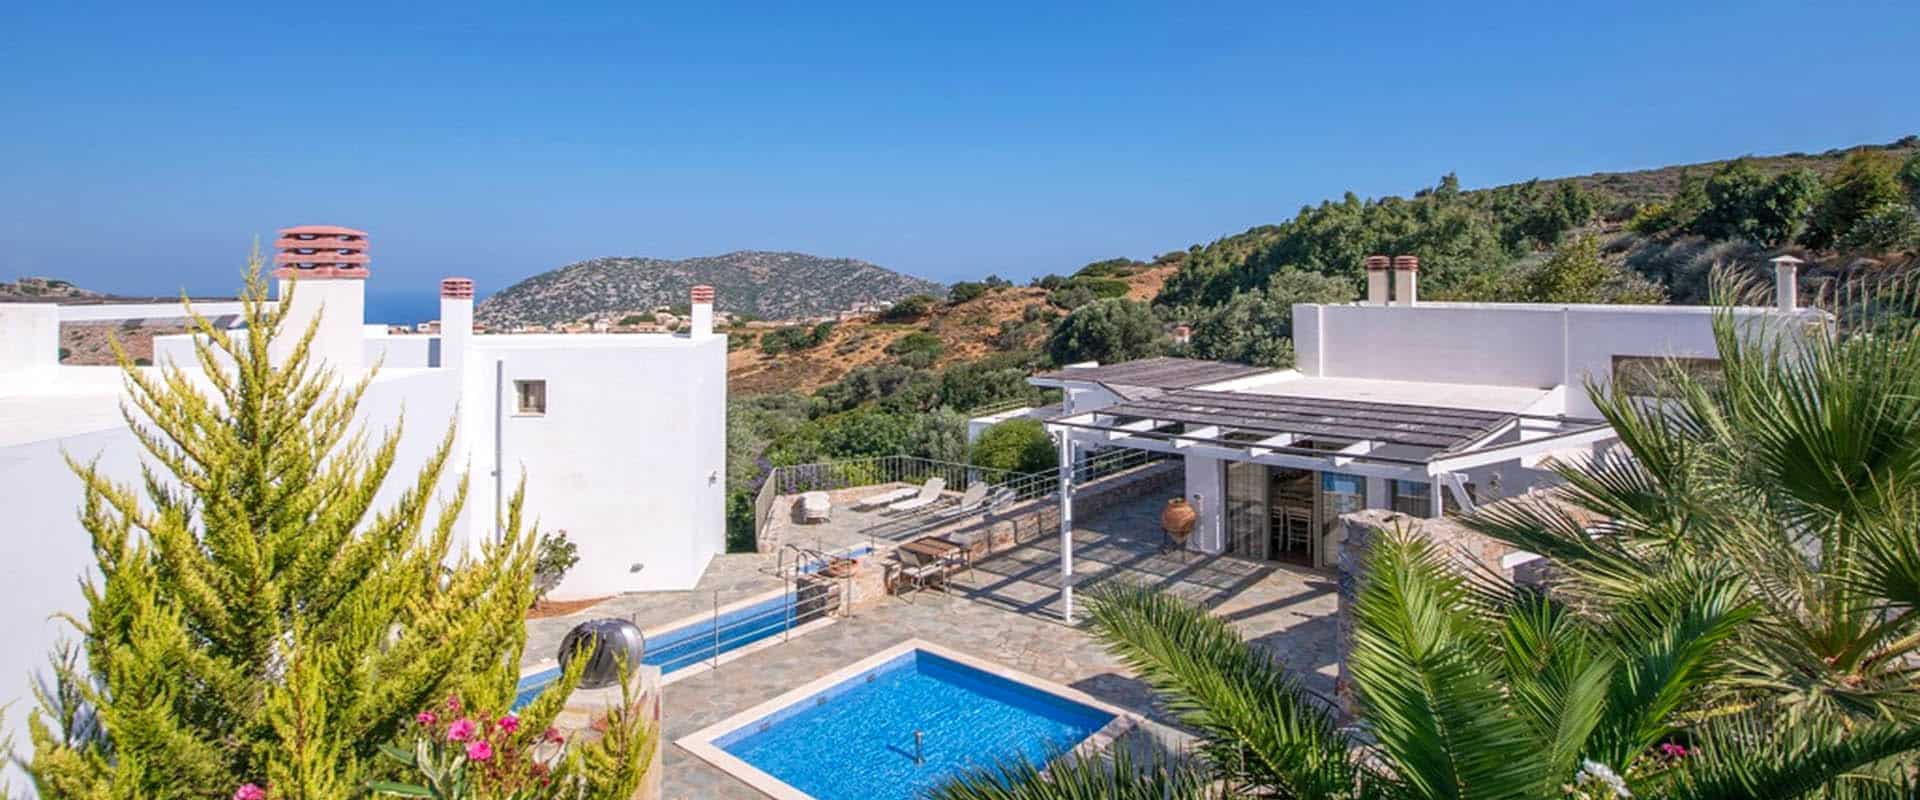 ekoturism semester hotell hållbar turism Kreta Grekland